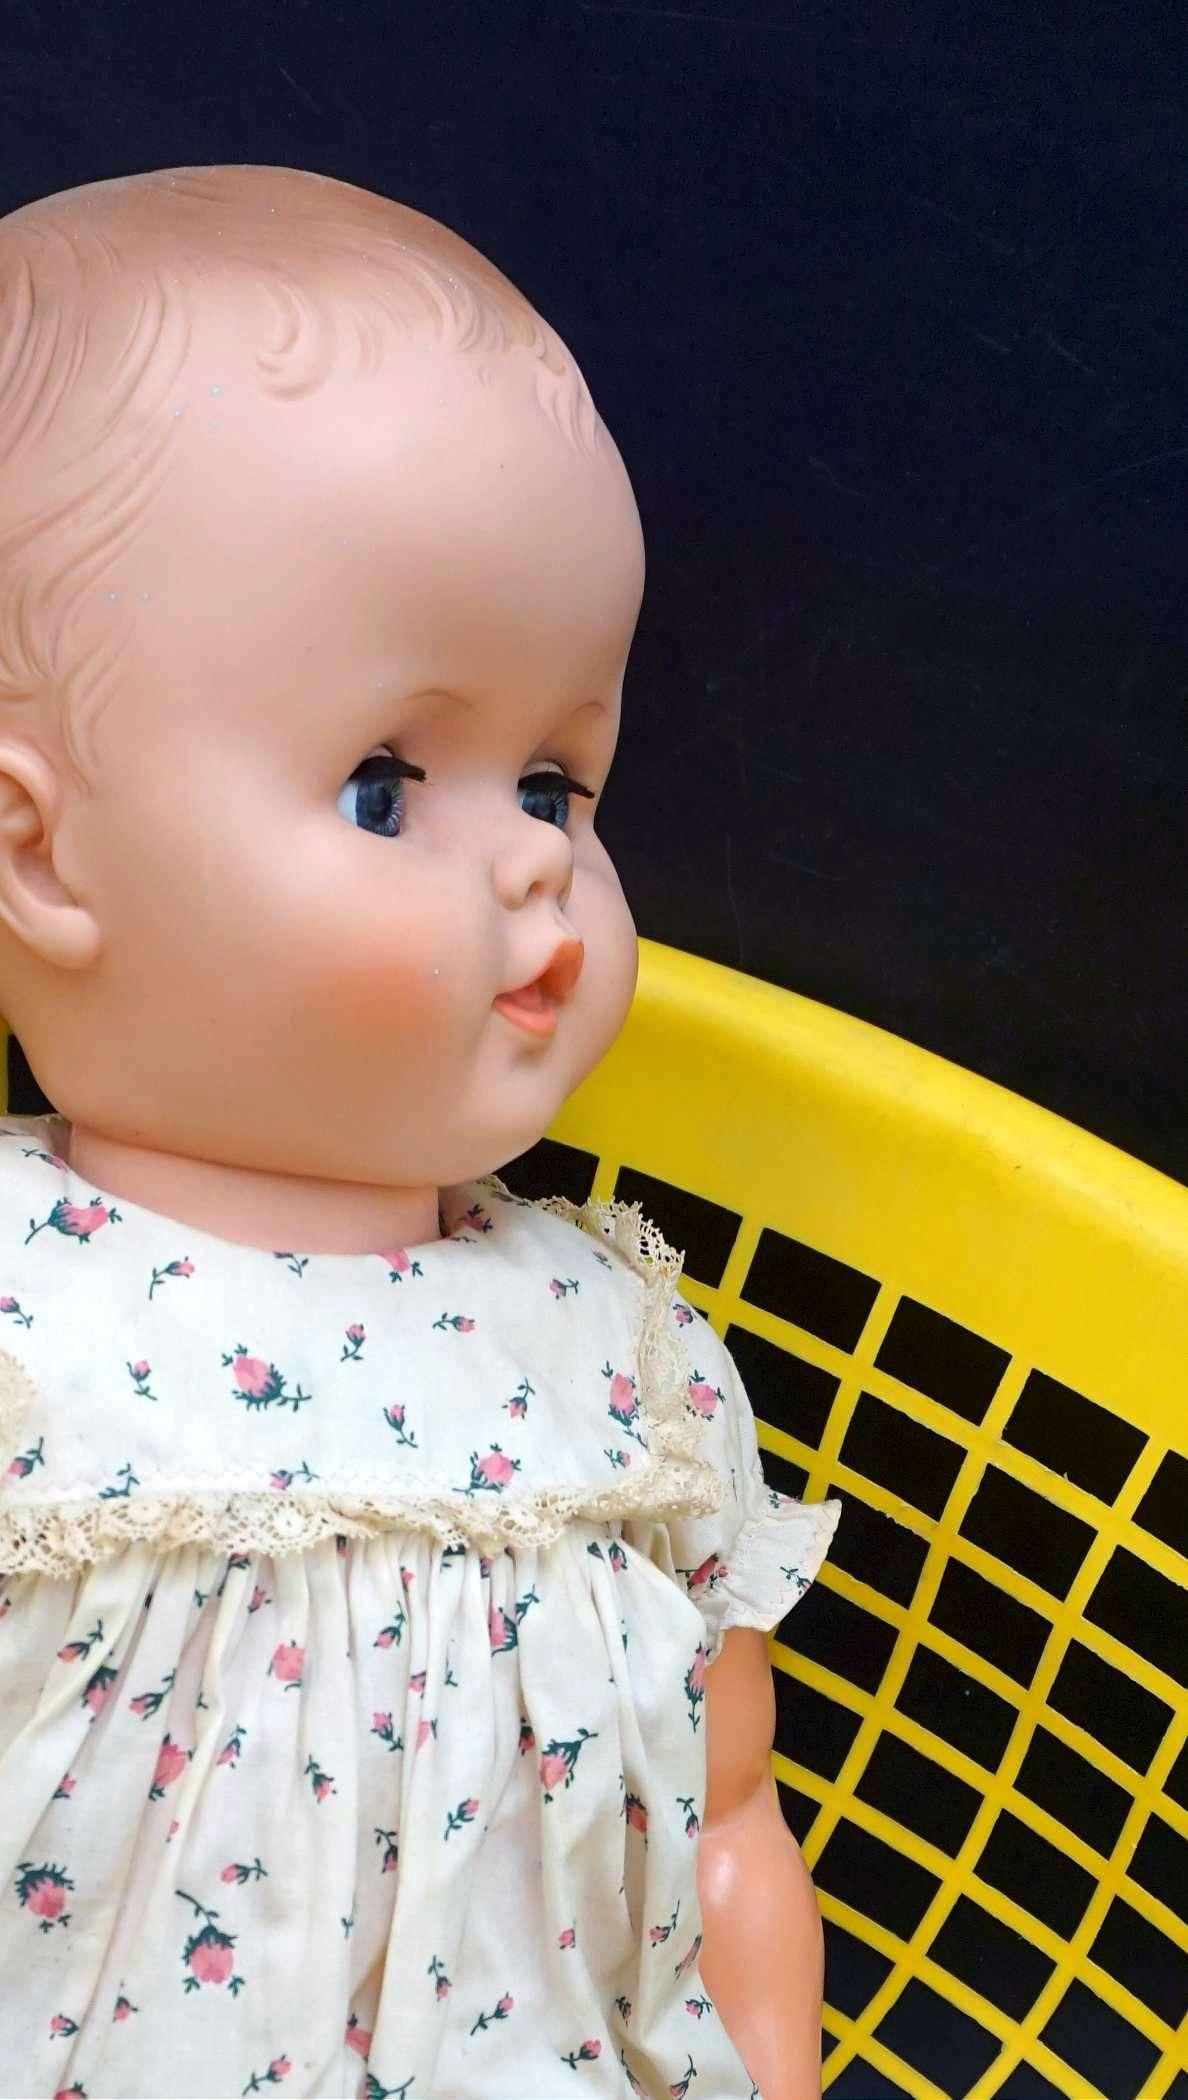 Yellow Plastic Basket, Plastic Step Stool & Baby Doll